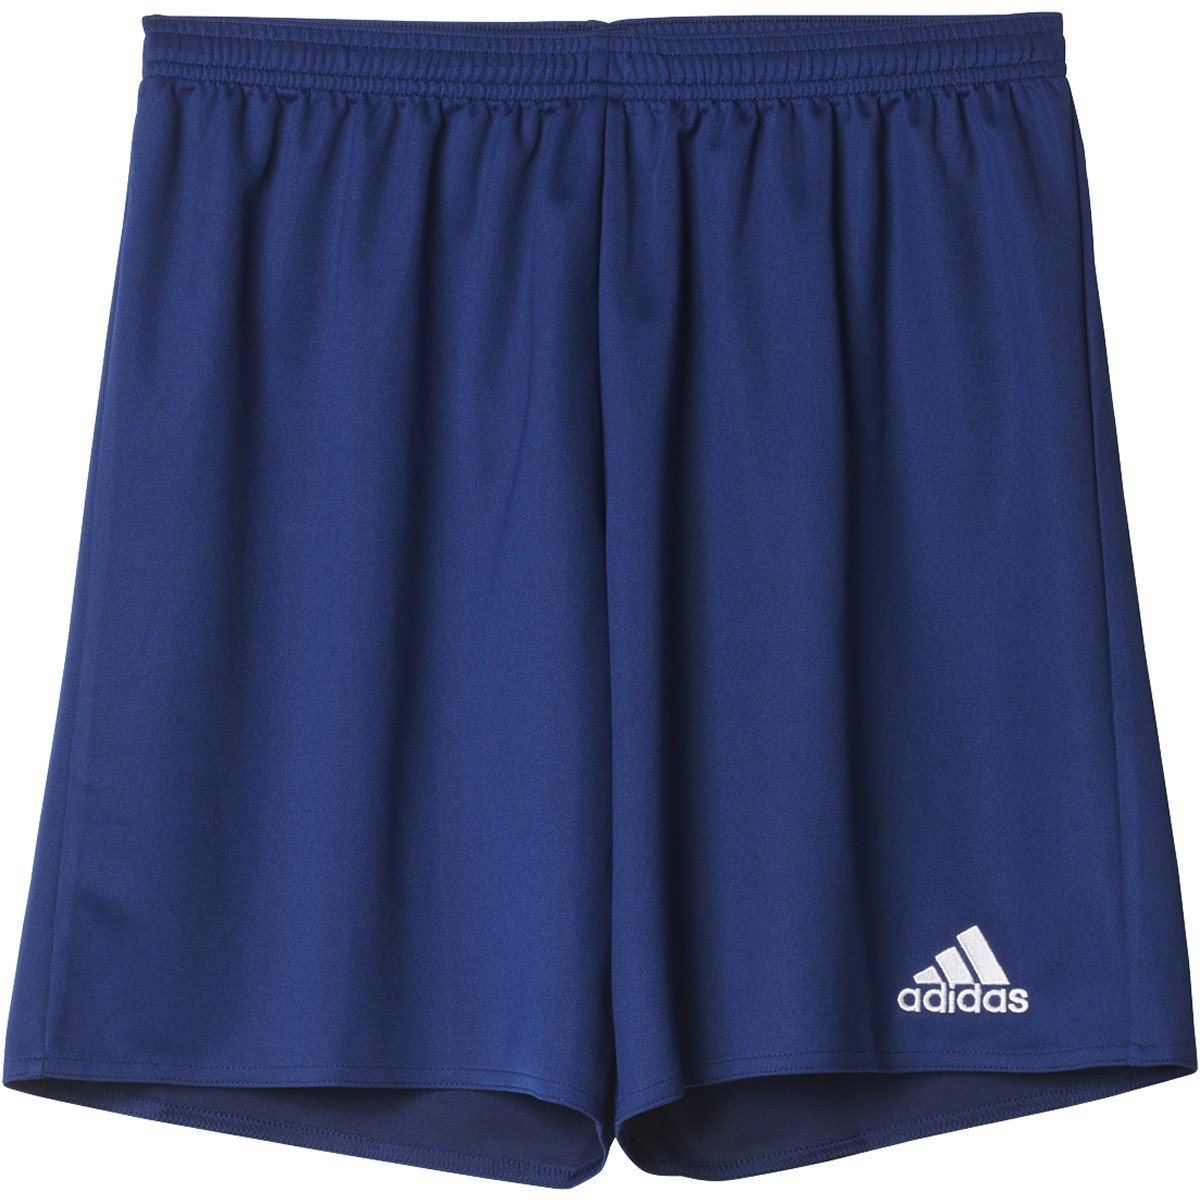 adidas Men's Parma 16 Short Team Shorts adidas Dark Blue/White X-Small 